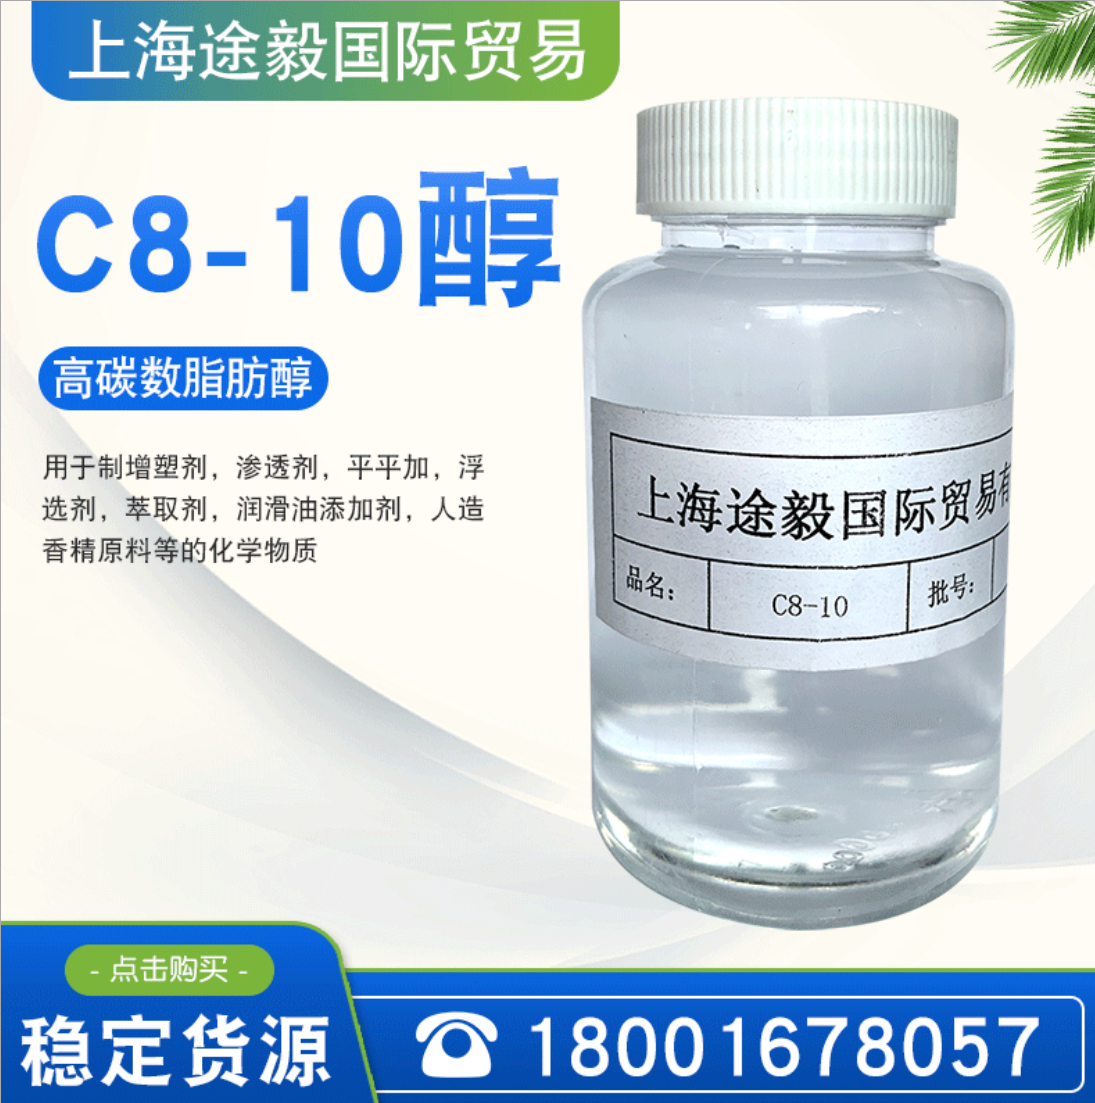 Aliphatic alcohol(C8-C10)   85566-12-7